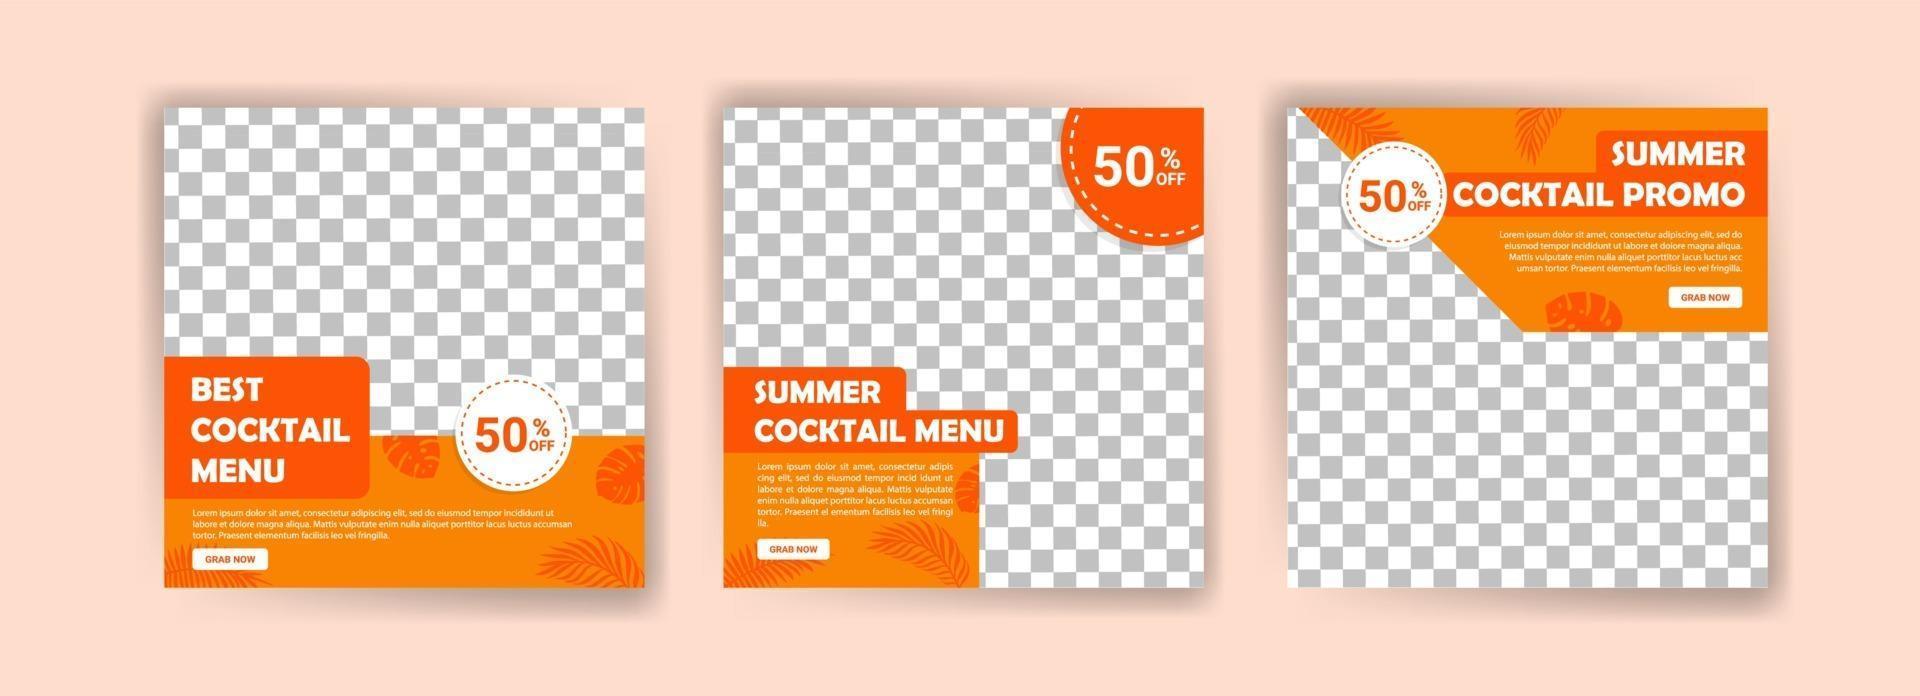 Social media post template for summer cocktail menu. vector